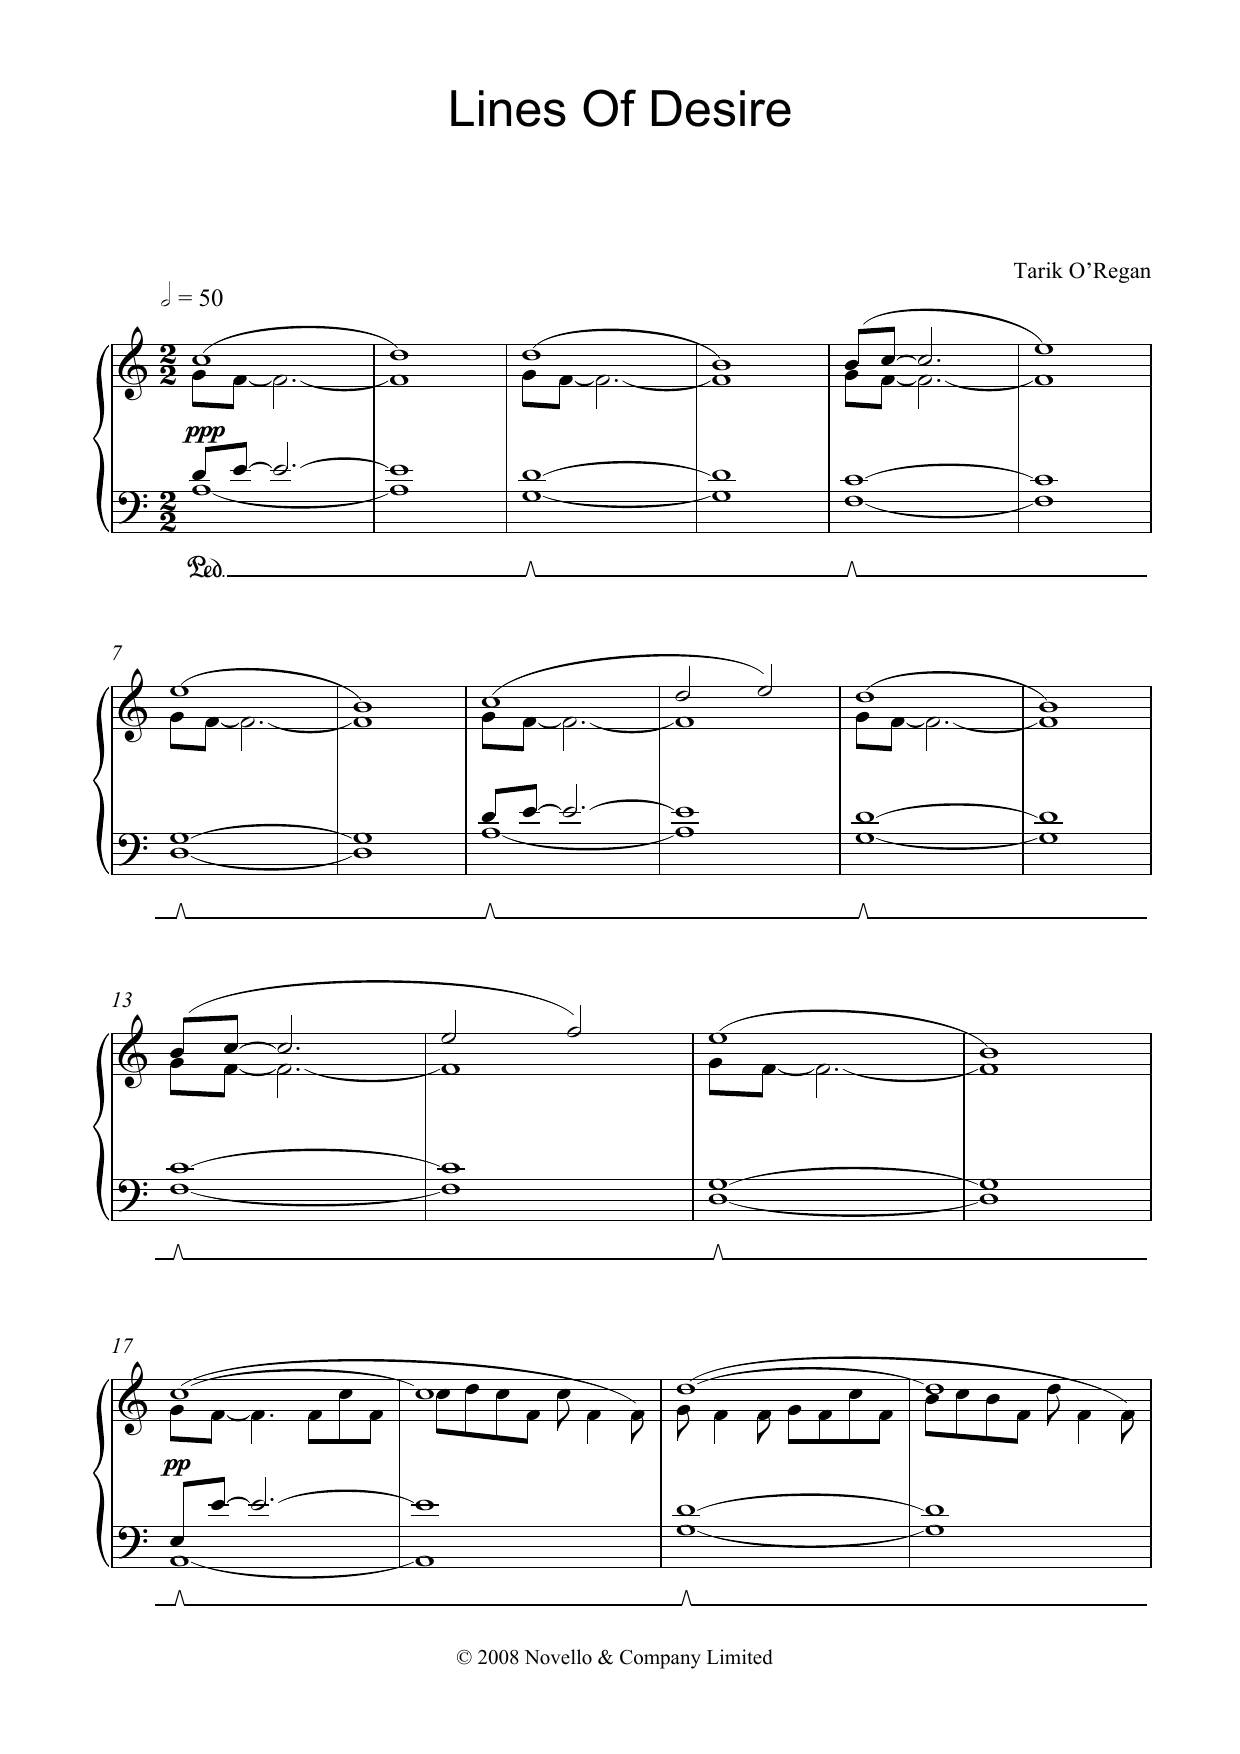 Tarik O'Regan Lines Of Desire Sheet Music Notes & Chords for Piano - Download or Print PDF